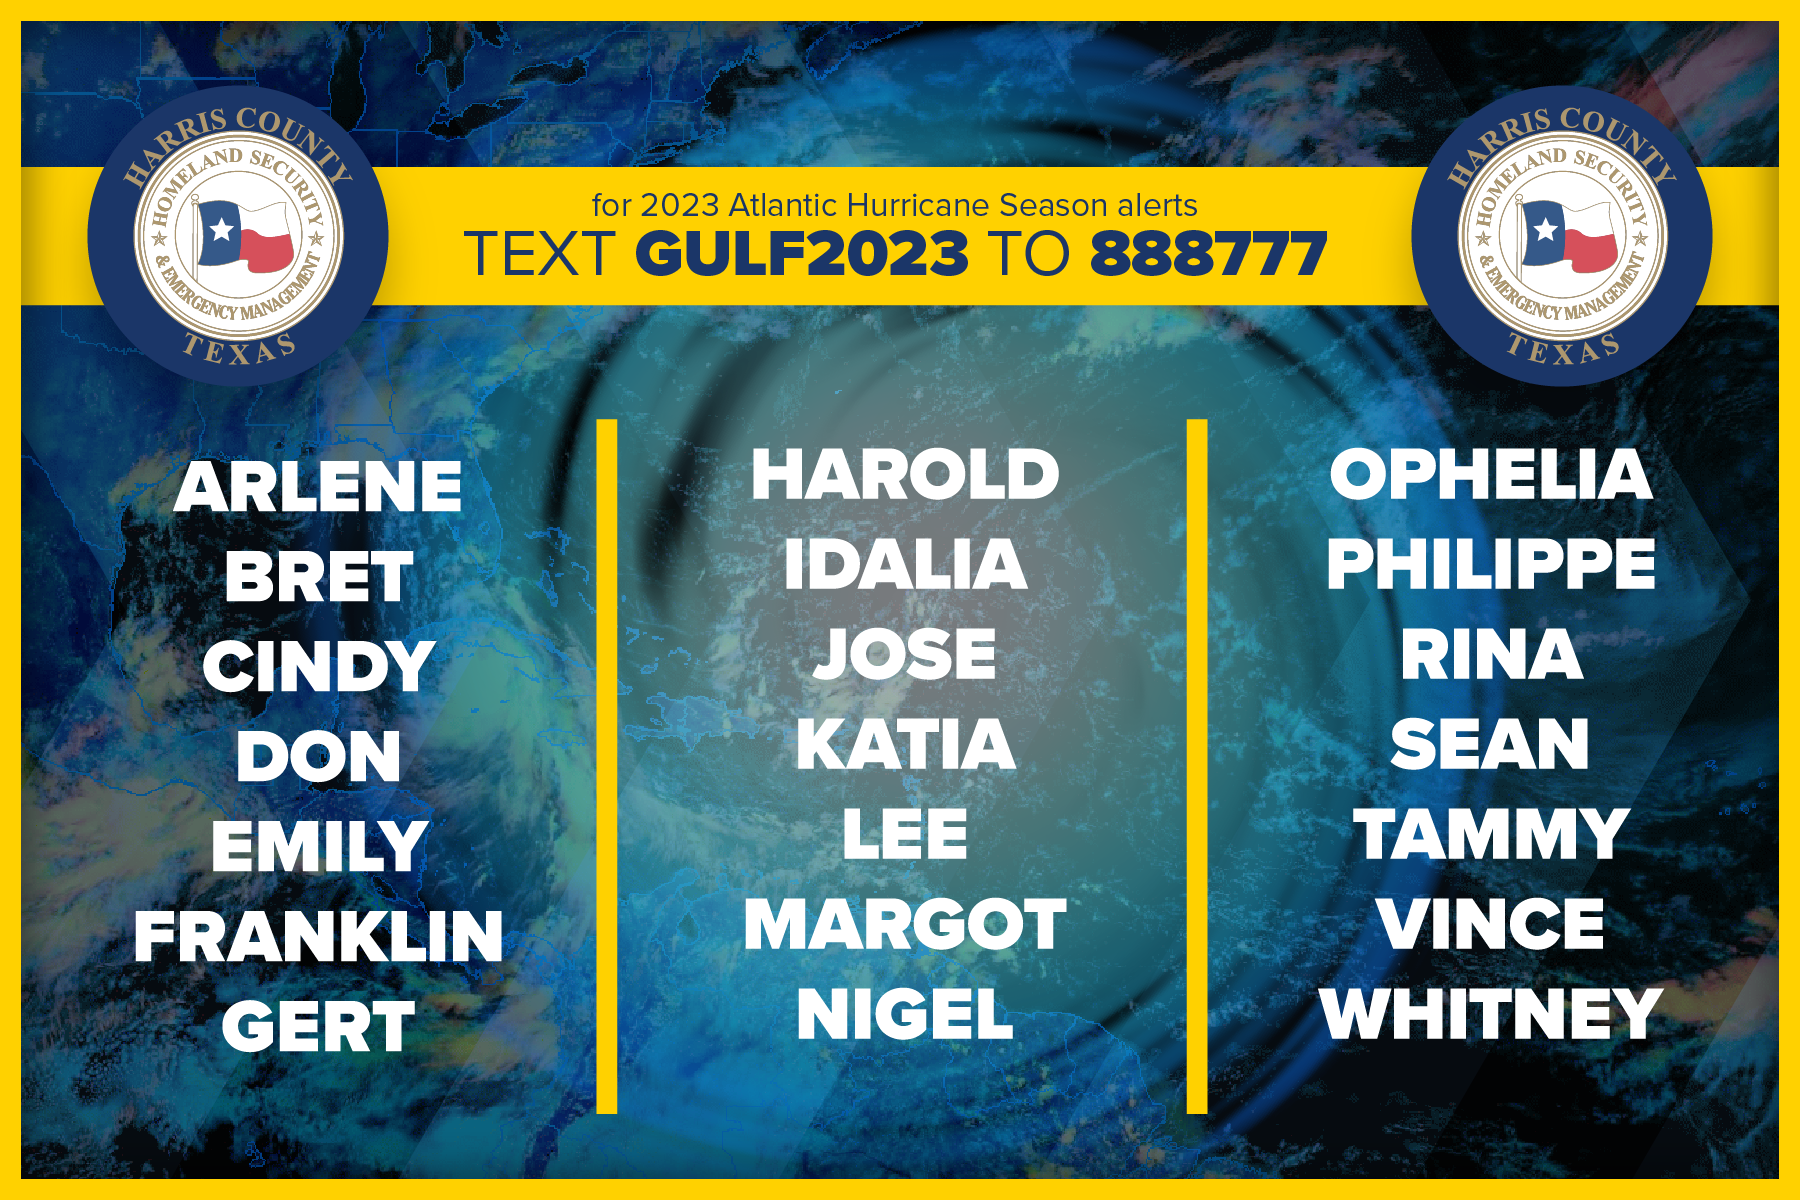 Image with a list of the 2023 Atlantic Hurricane Season Names